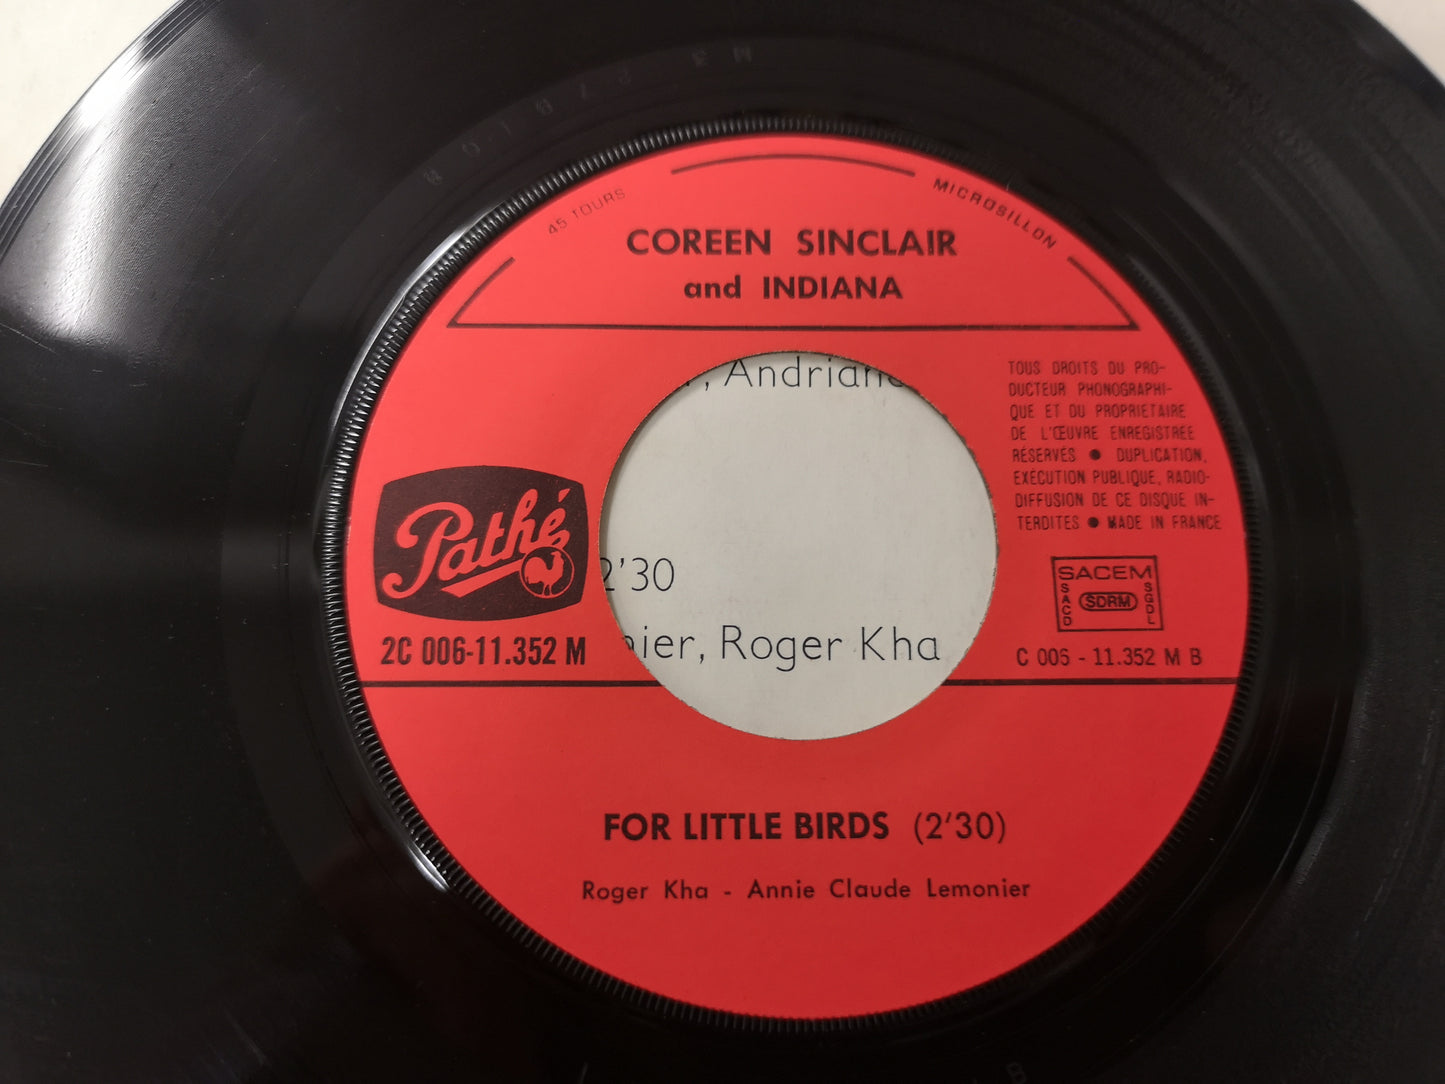 Coreen Sinclair & Indiana "For Little Birds" Orig France 1971 VG/VG+ (7" Single)